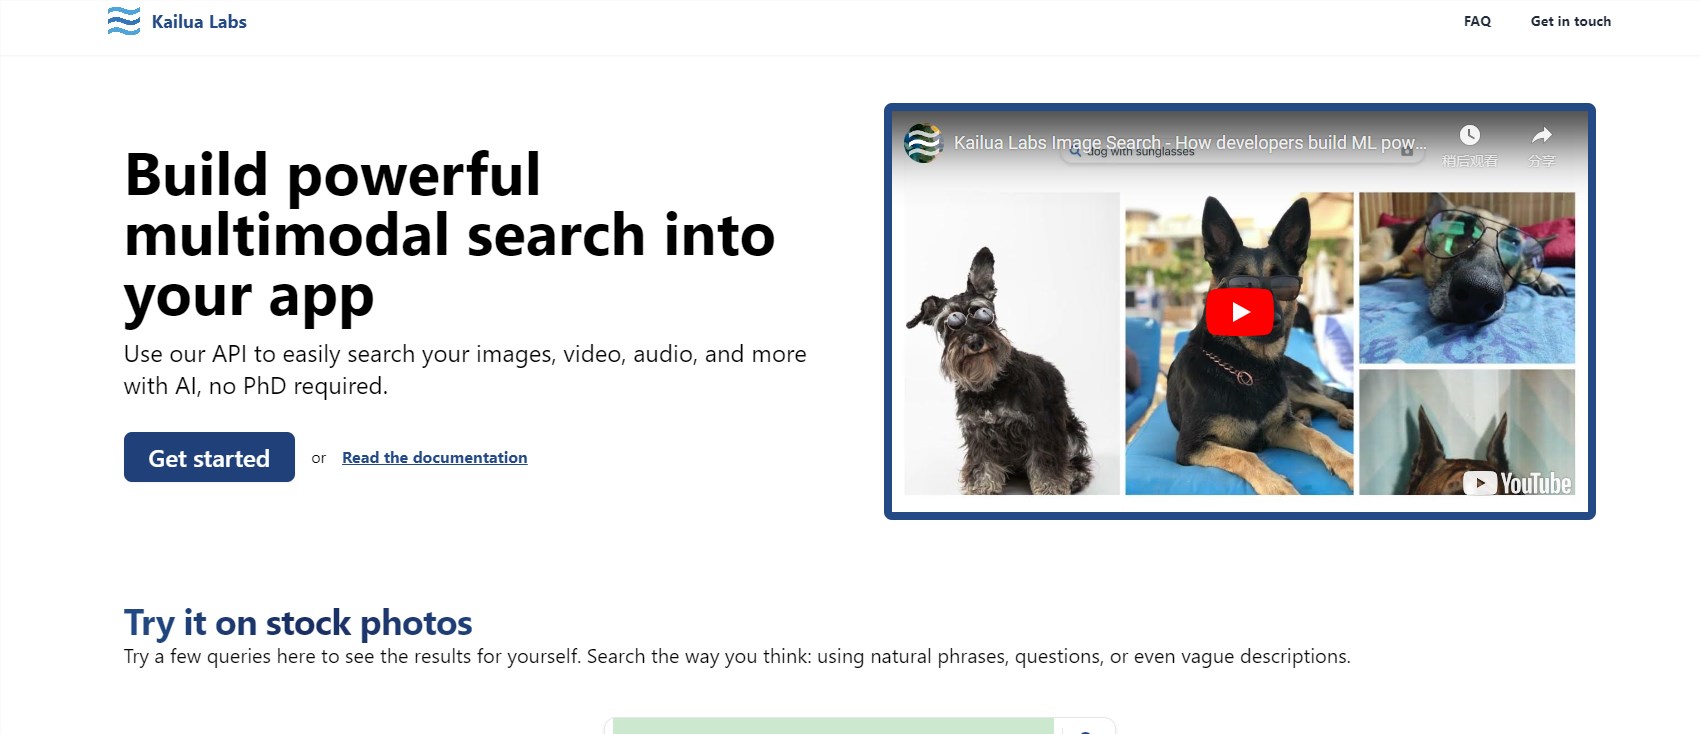 AI搜索引擎Kailua Labs：多模式搜索 可轻松搜索文本、图像